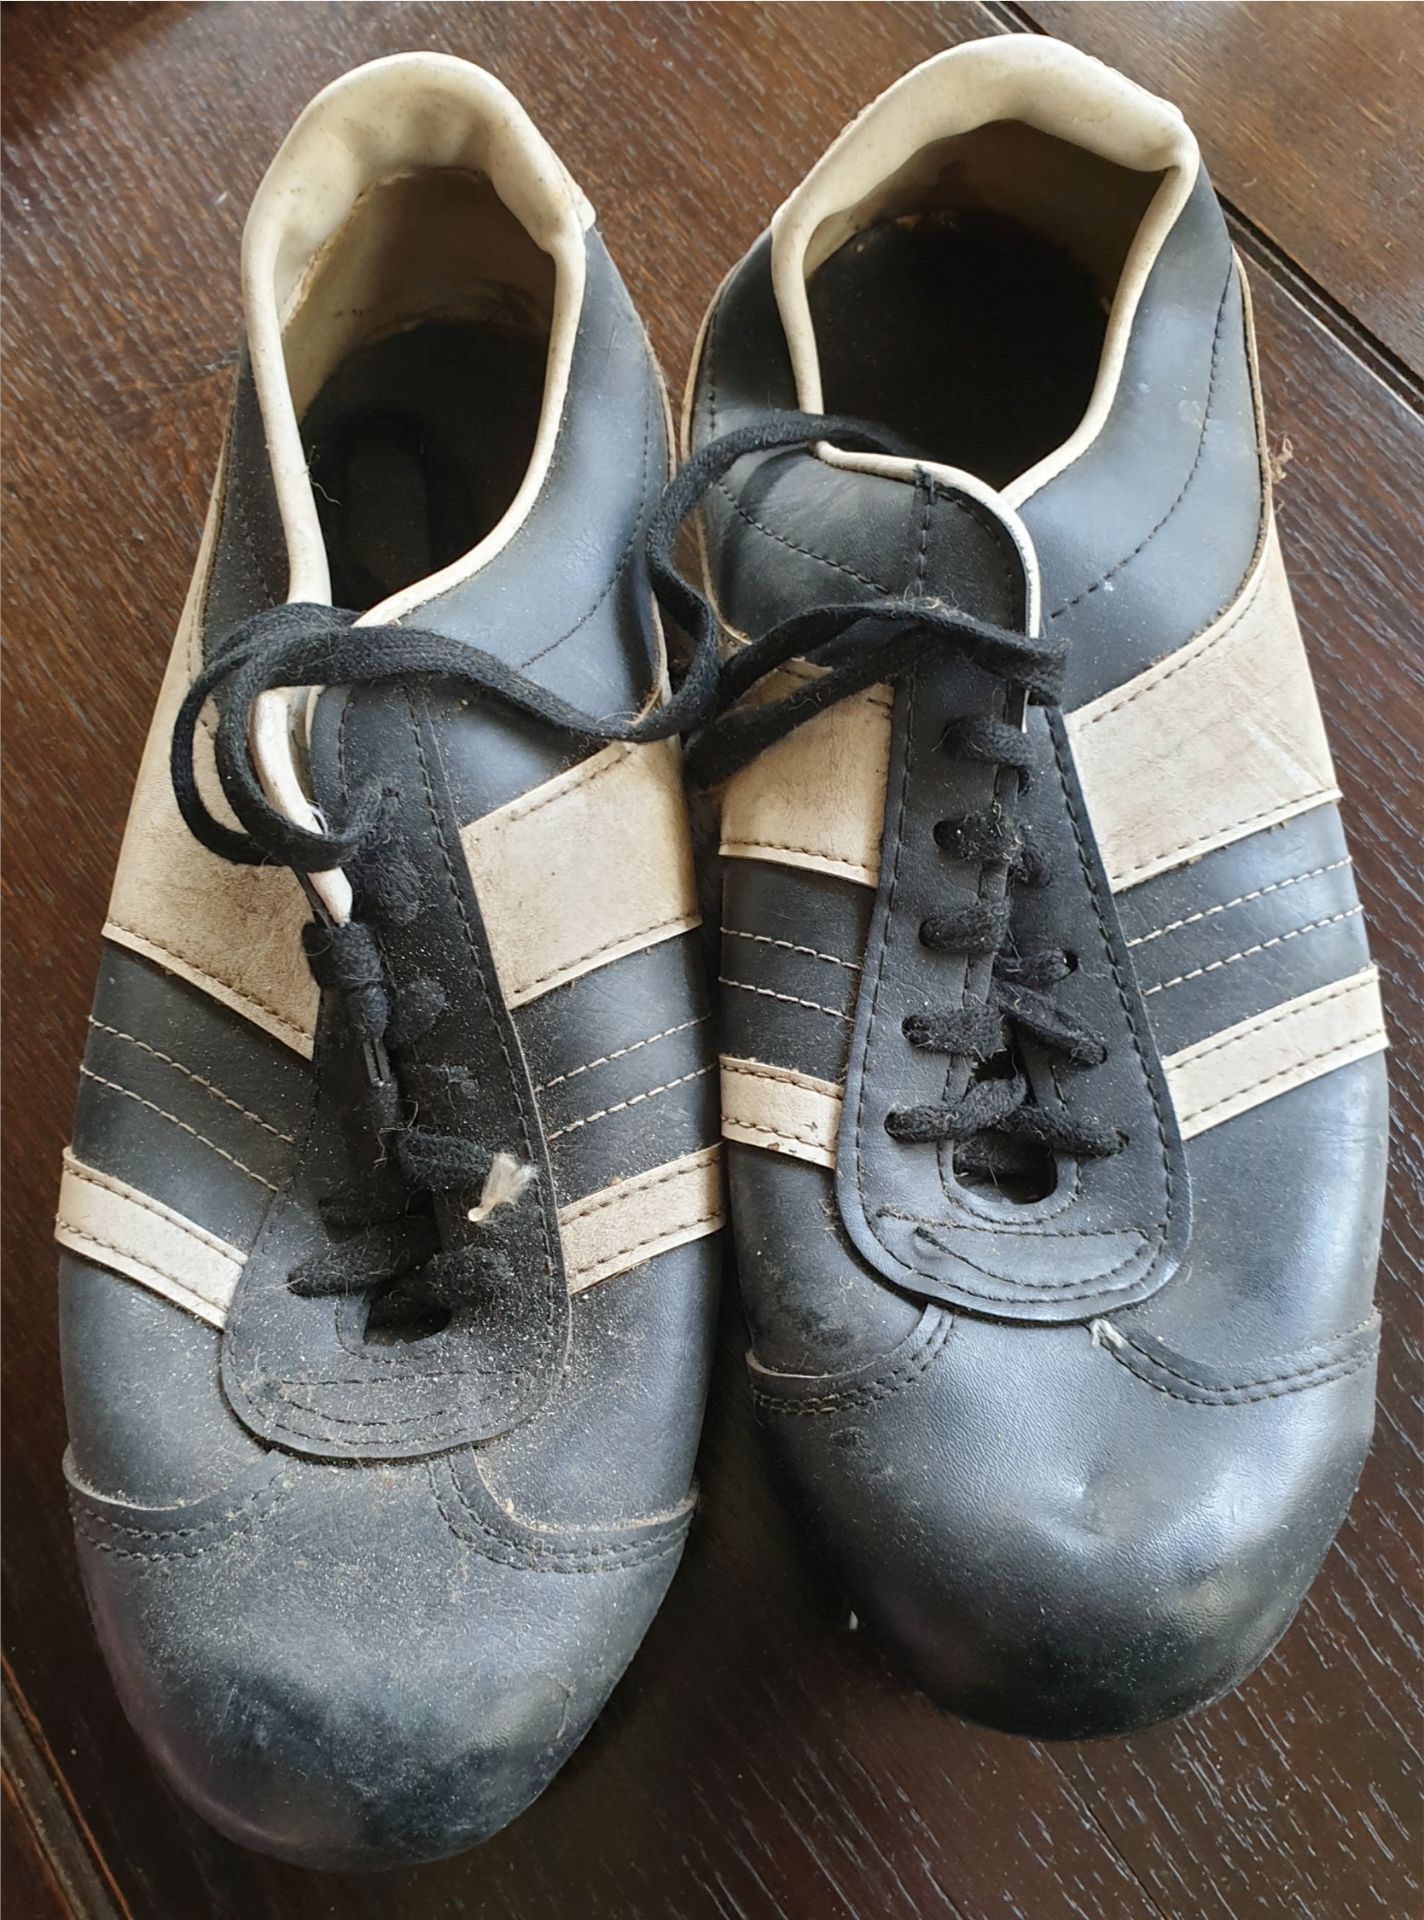 Vintage Retro Kitsch Leather Football Boots c1970's Blue & White UK Size 10